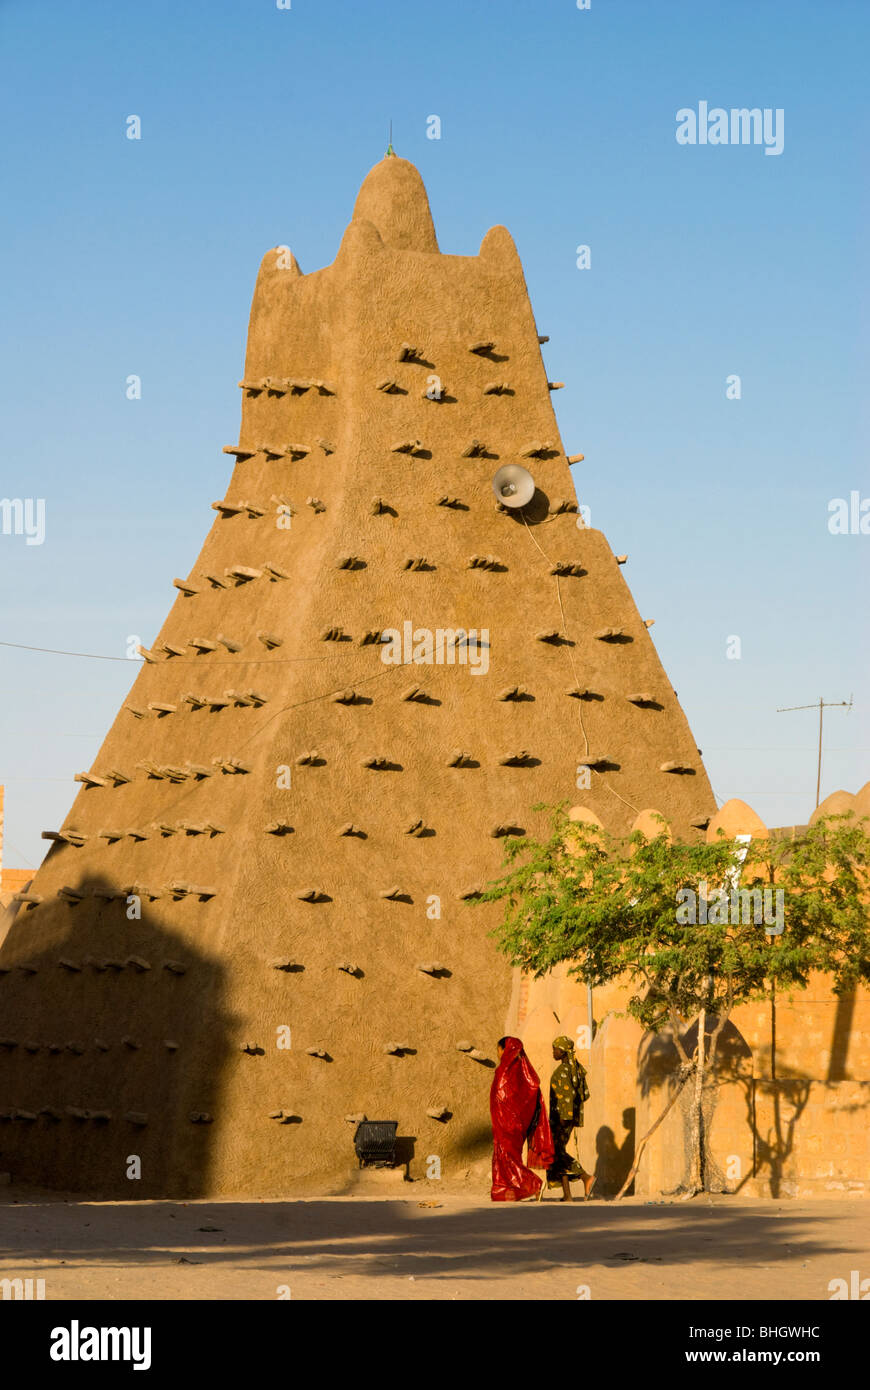 Sankoré mosque.Built in 15th-16th centuries . Timbuktu city. Timbuktu region. Mali. Stock Photo